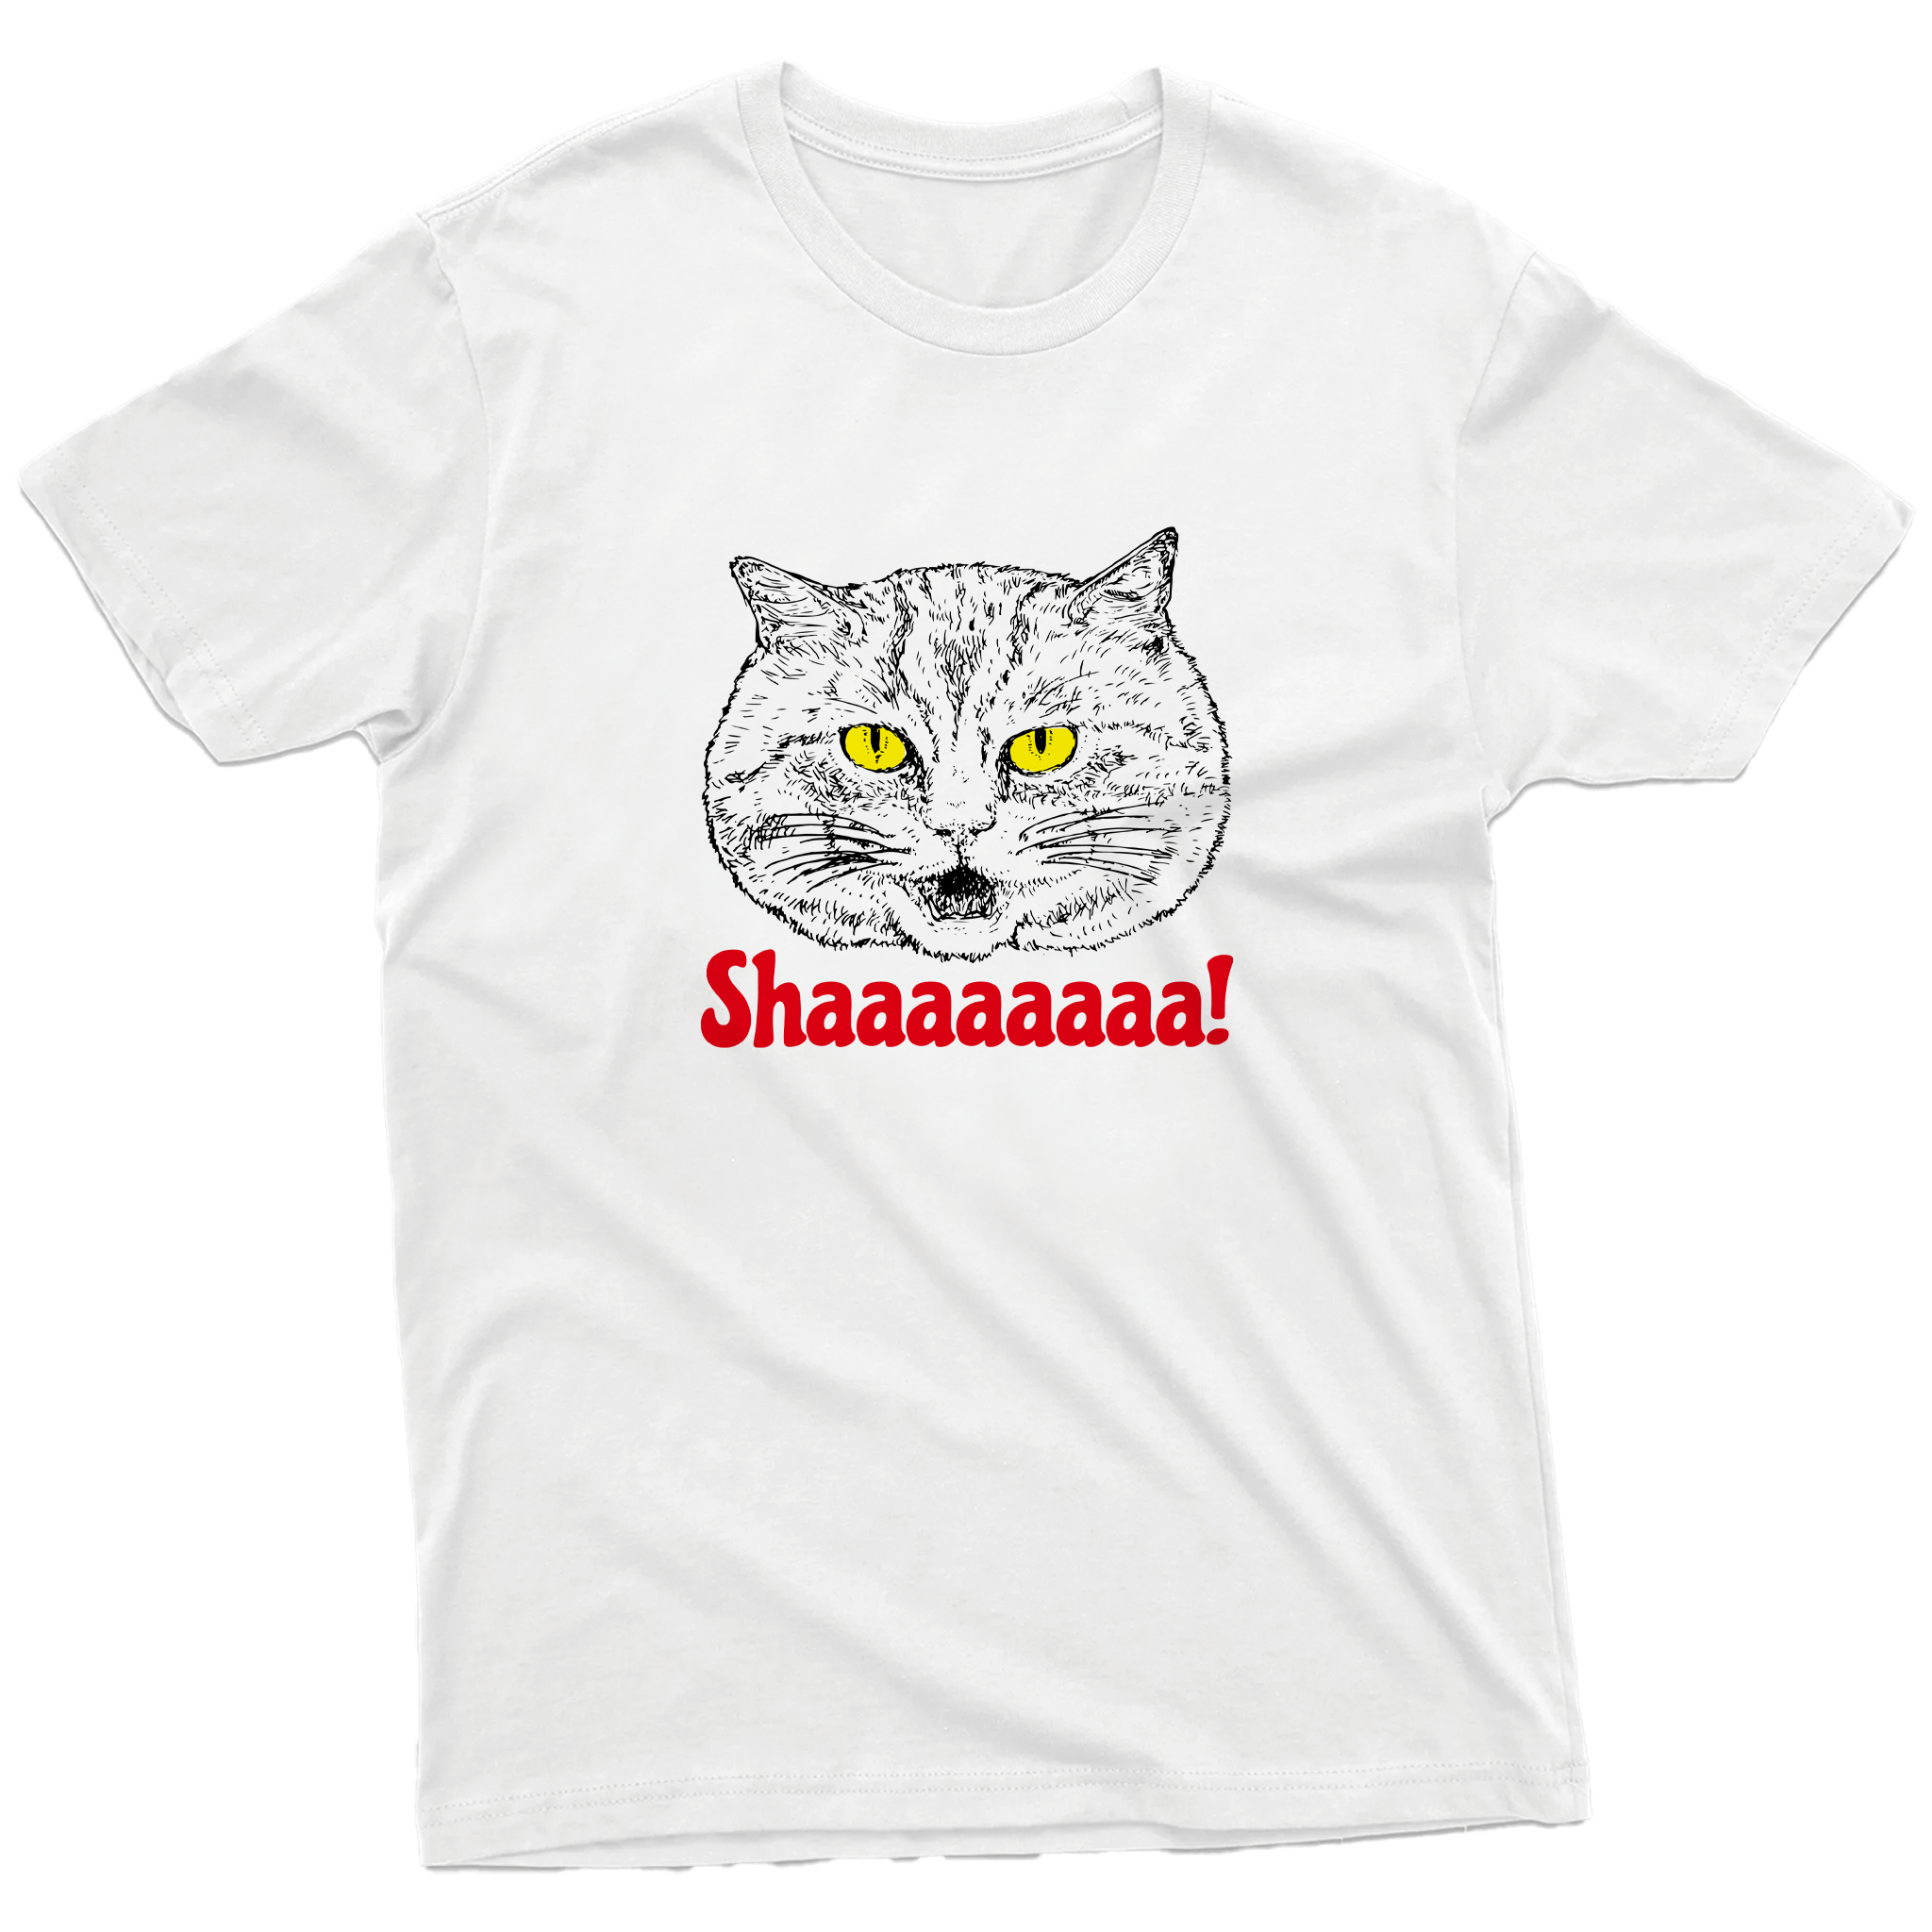 Shaaaaaaaa!  Mens Japanese T-Shirt -White